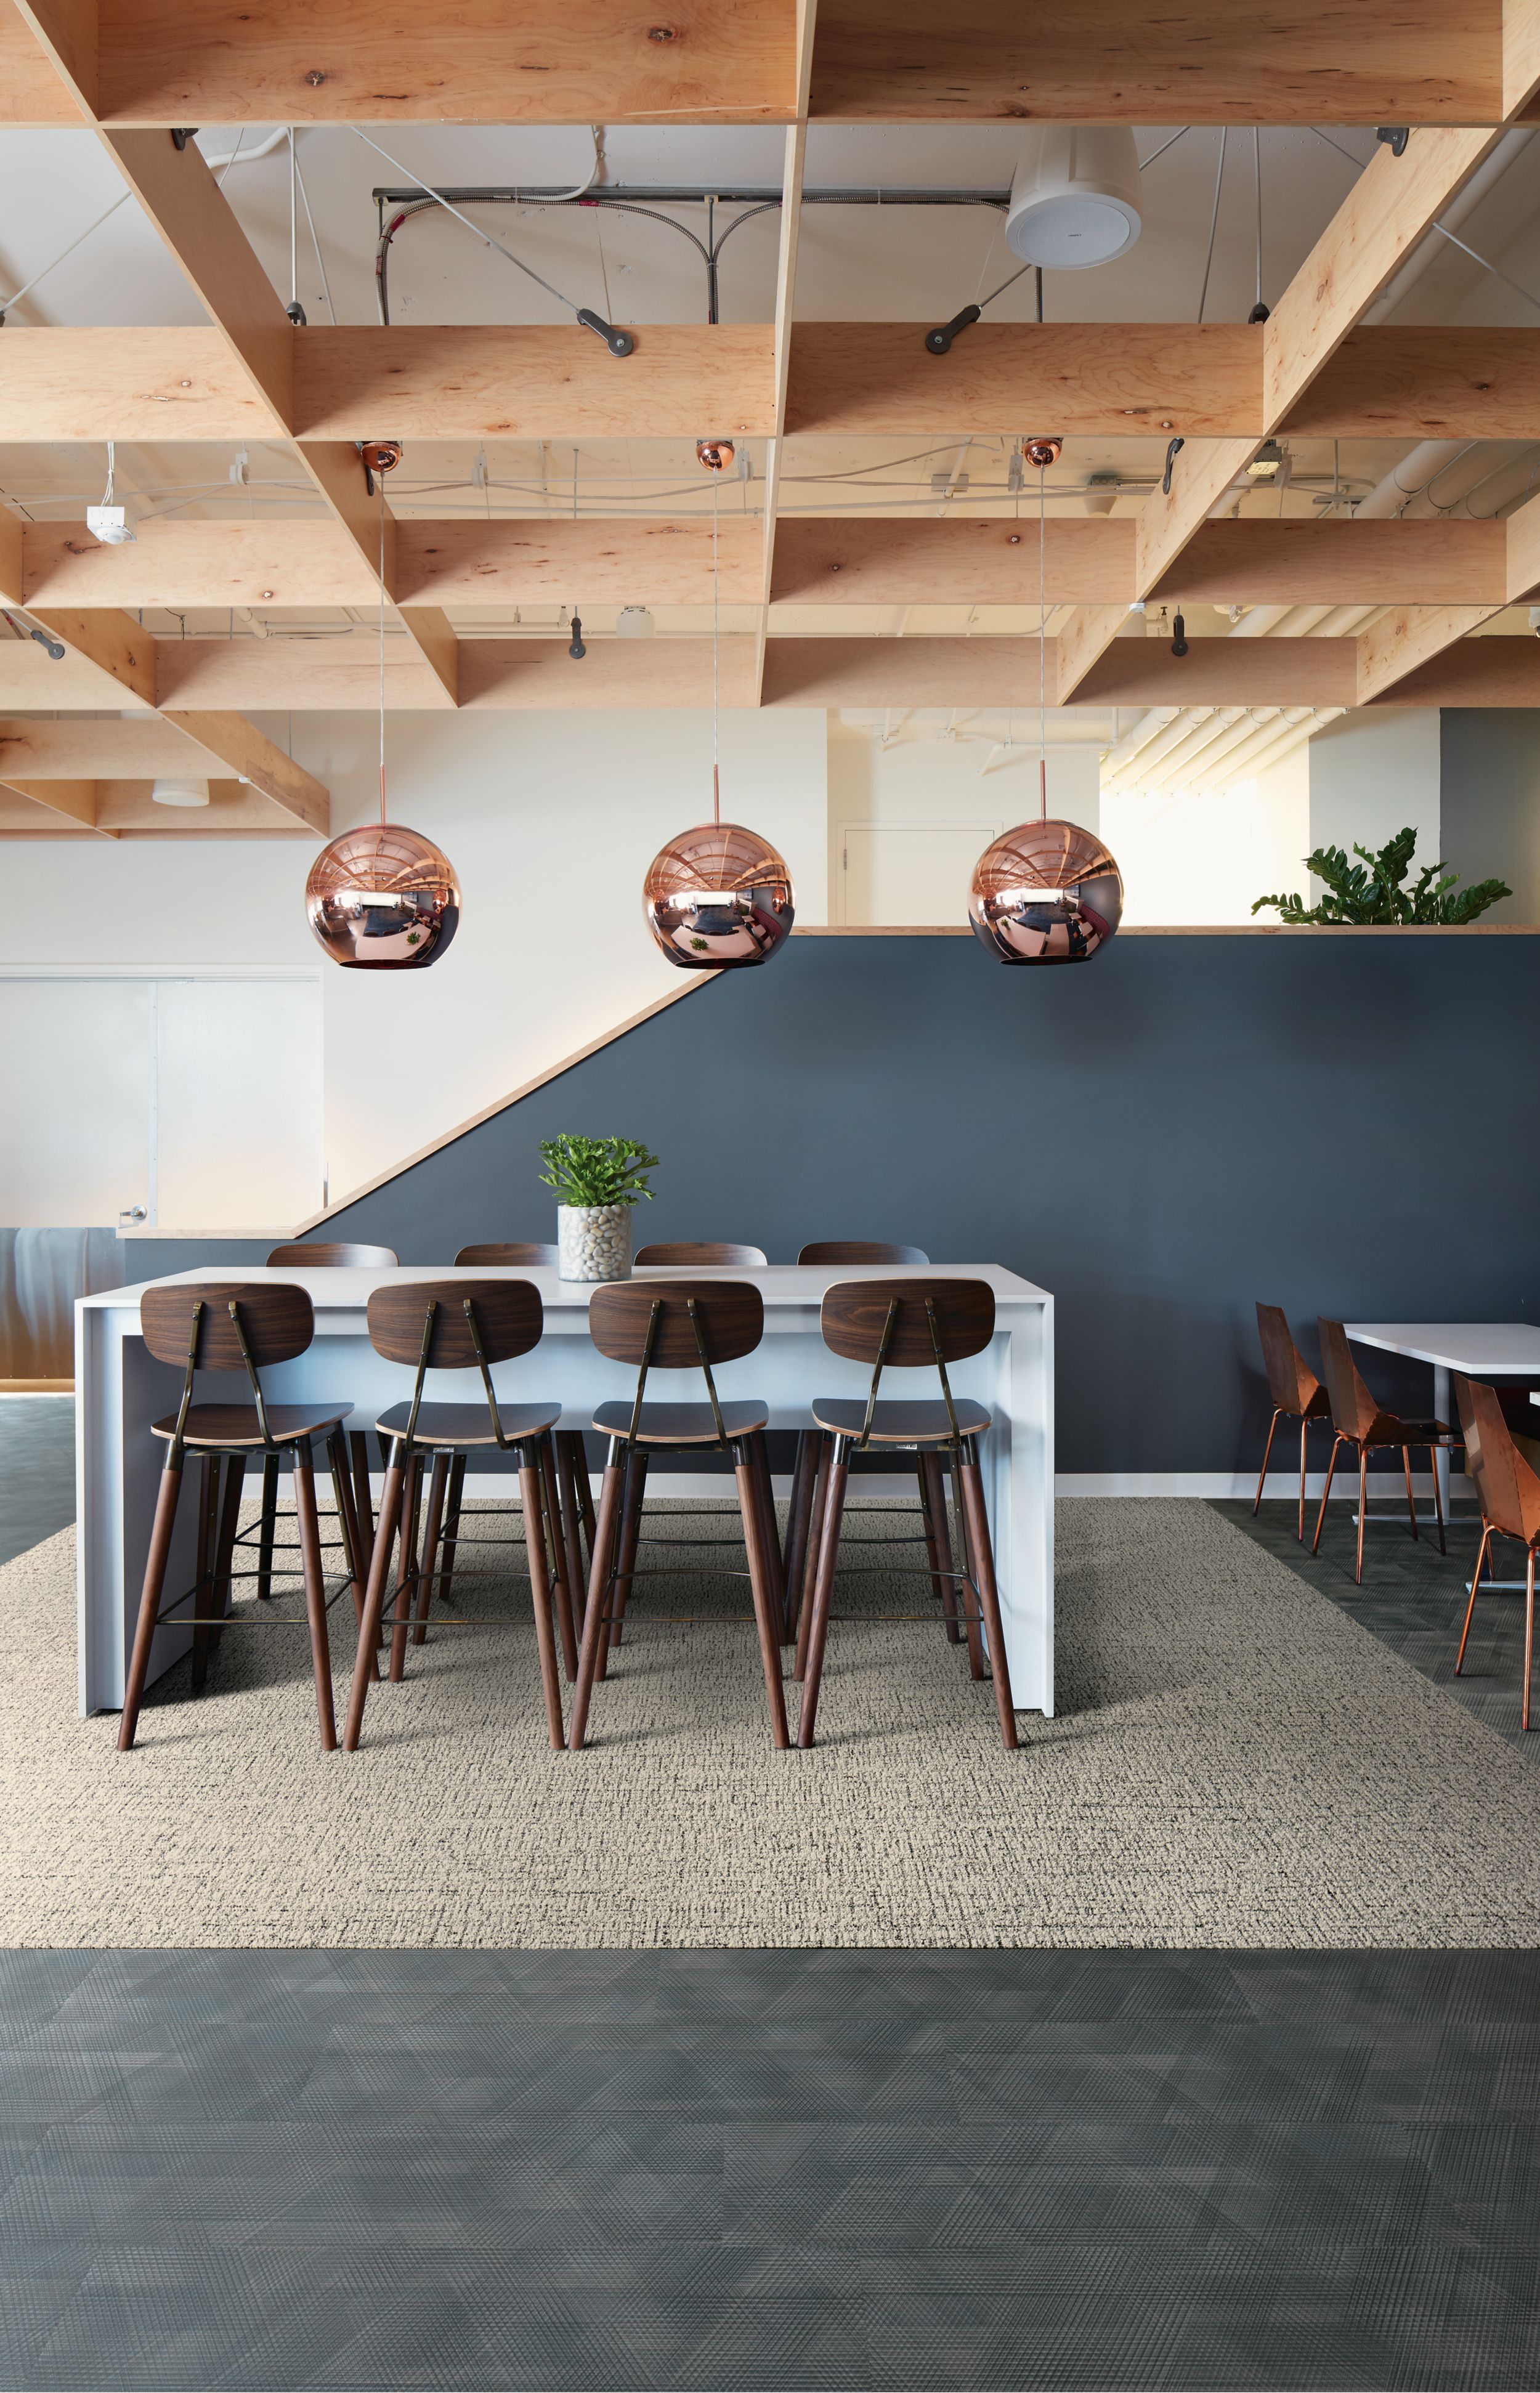 Interface Haptic plank carpet tile and Drawn Lines LVT in public office space with wood grid ceiling número de imagen 6